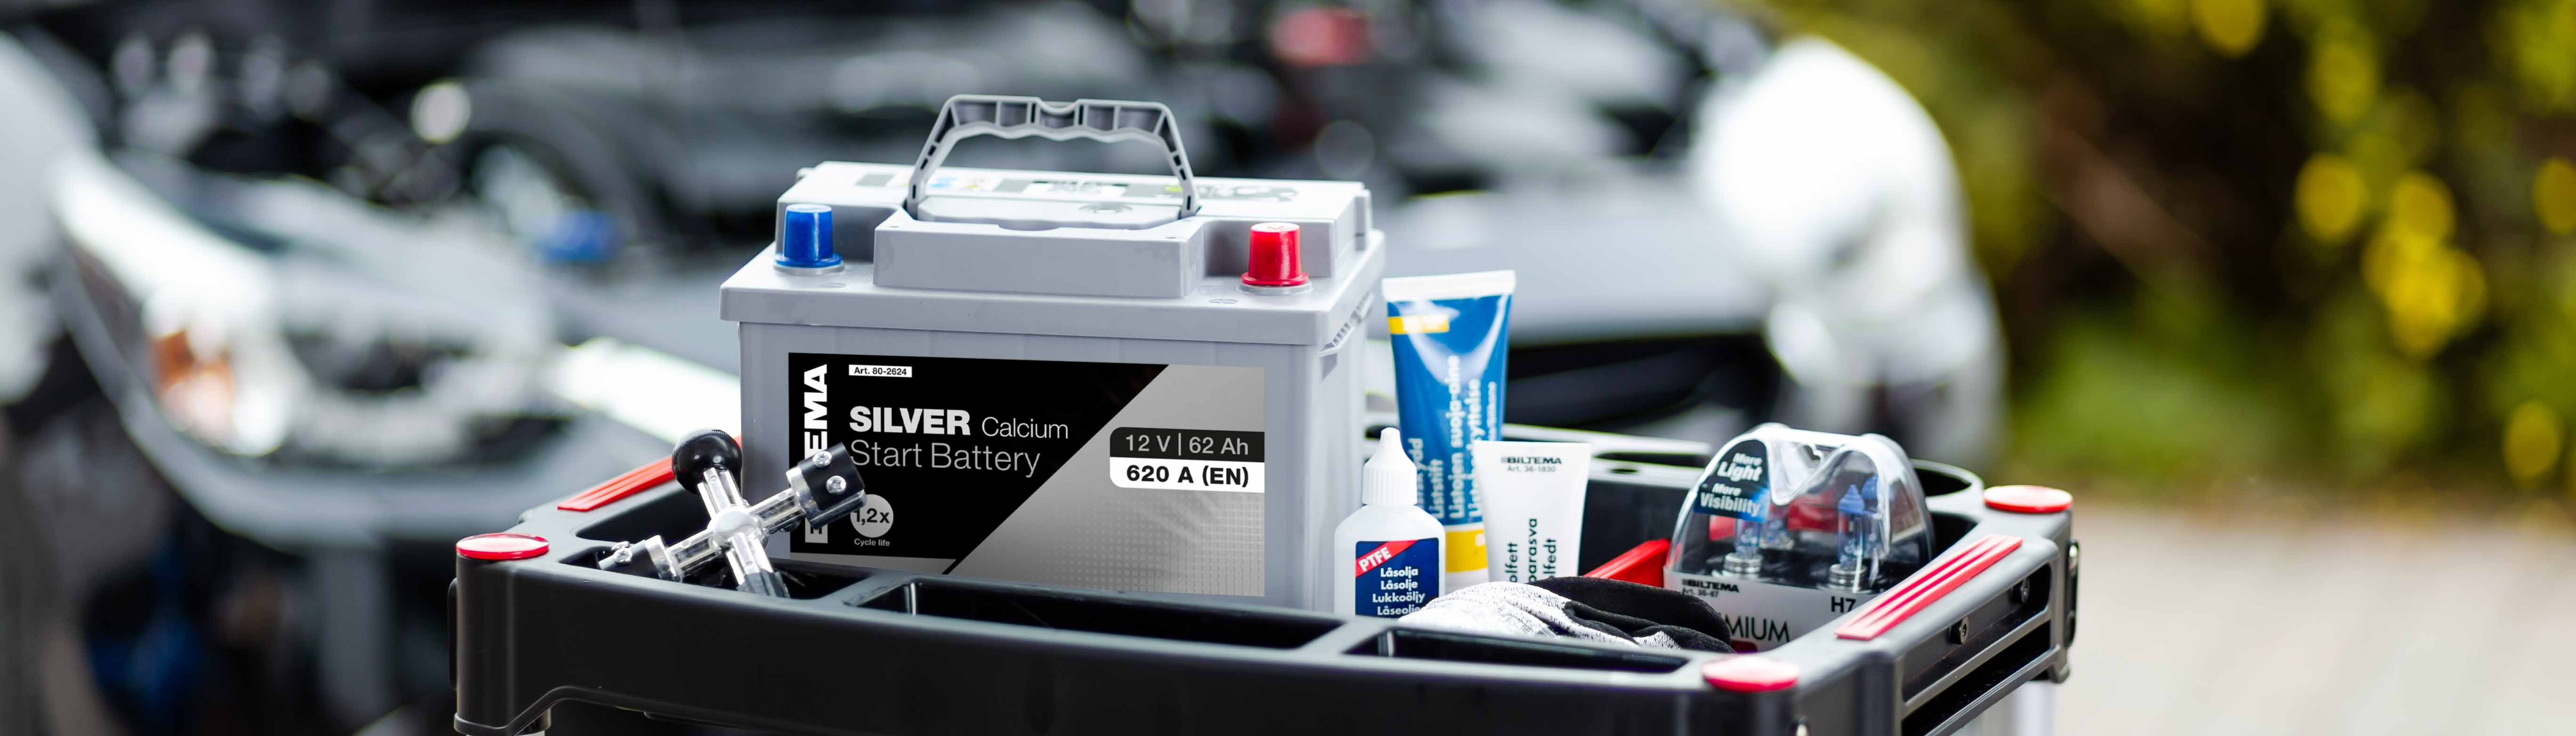 Vehicle batteries